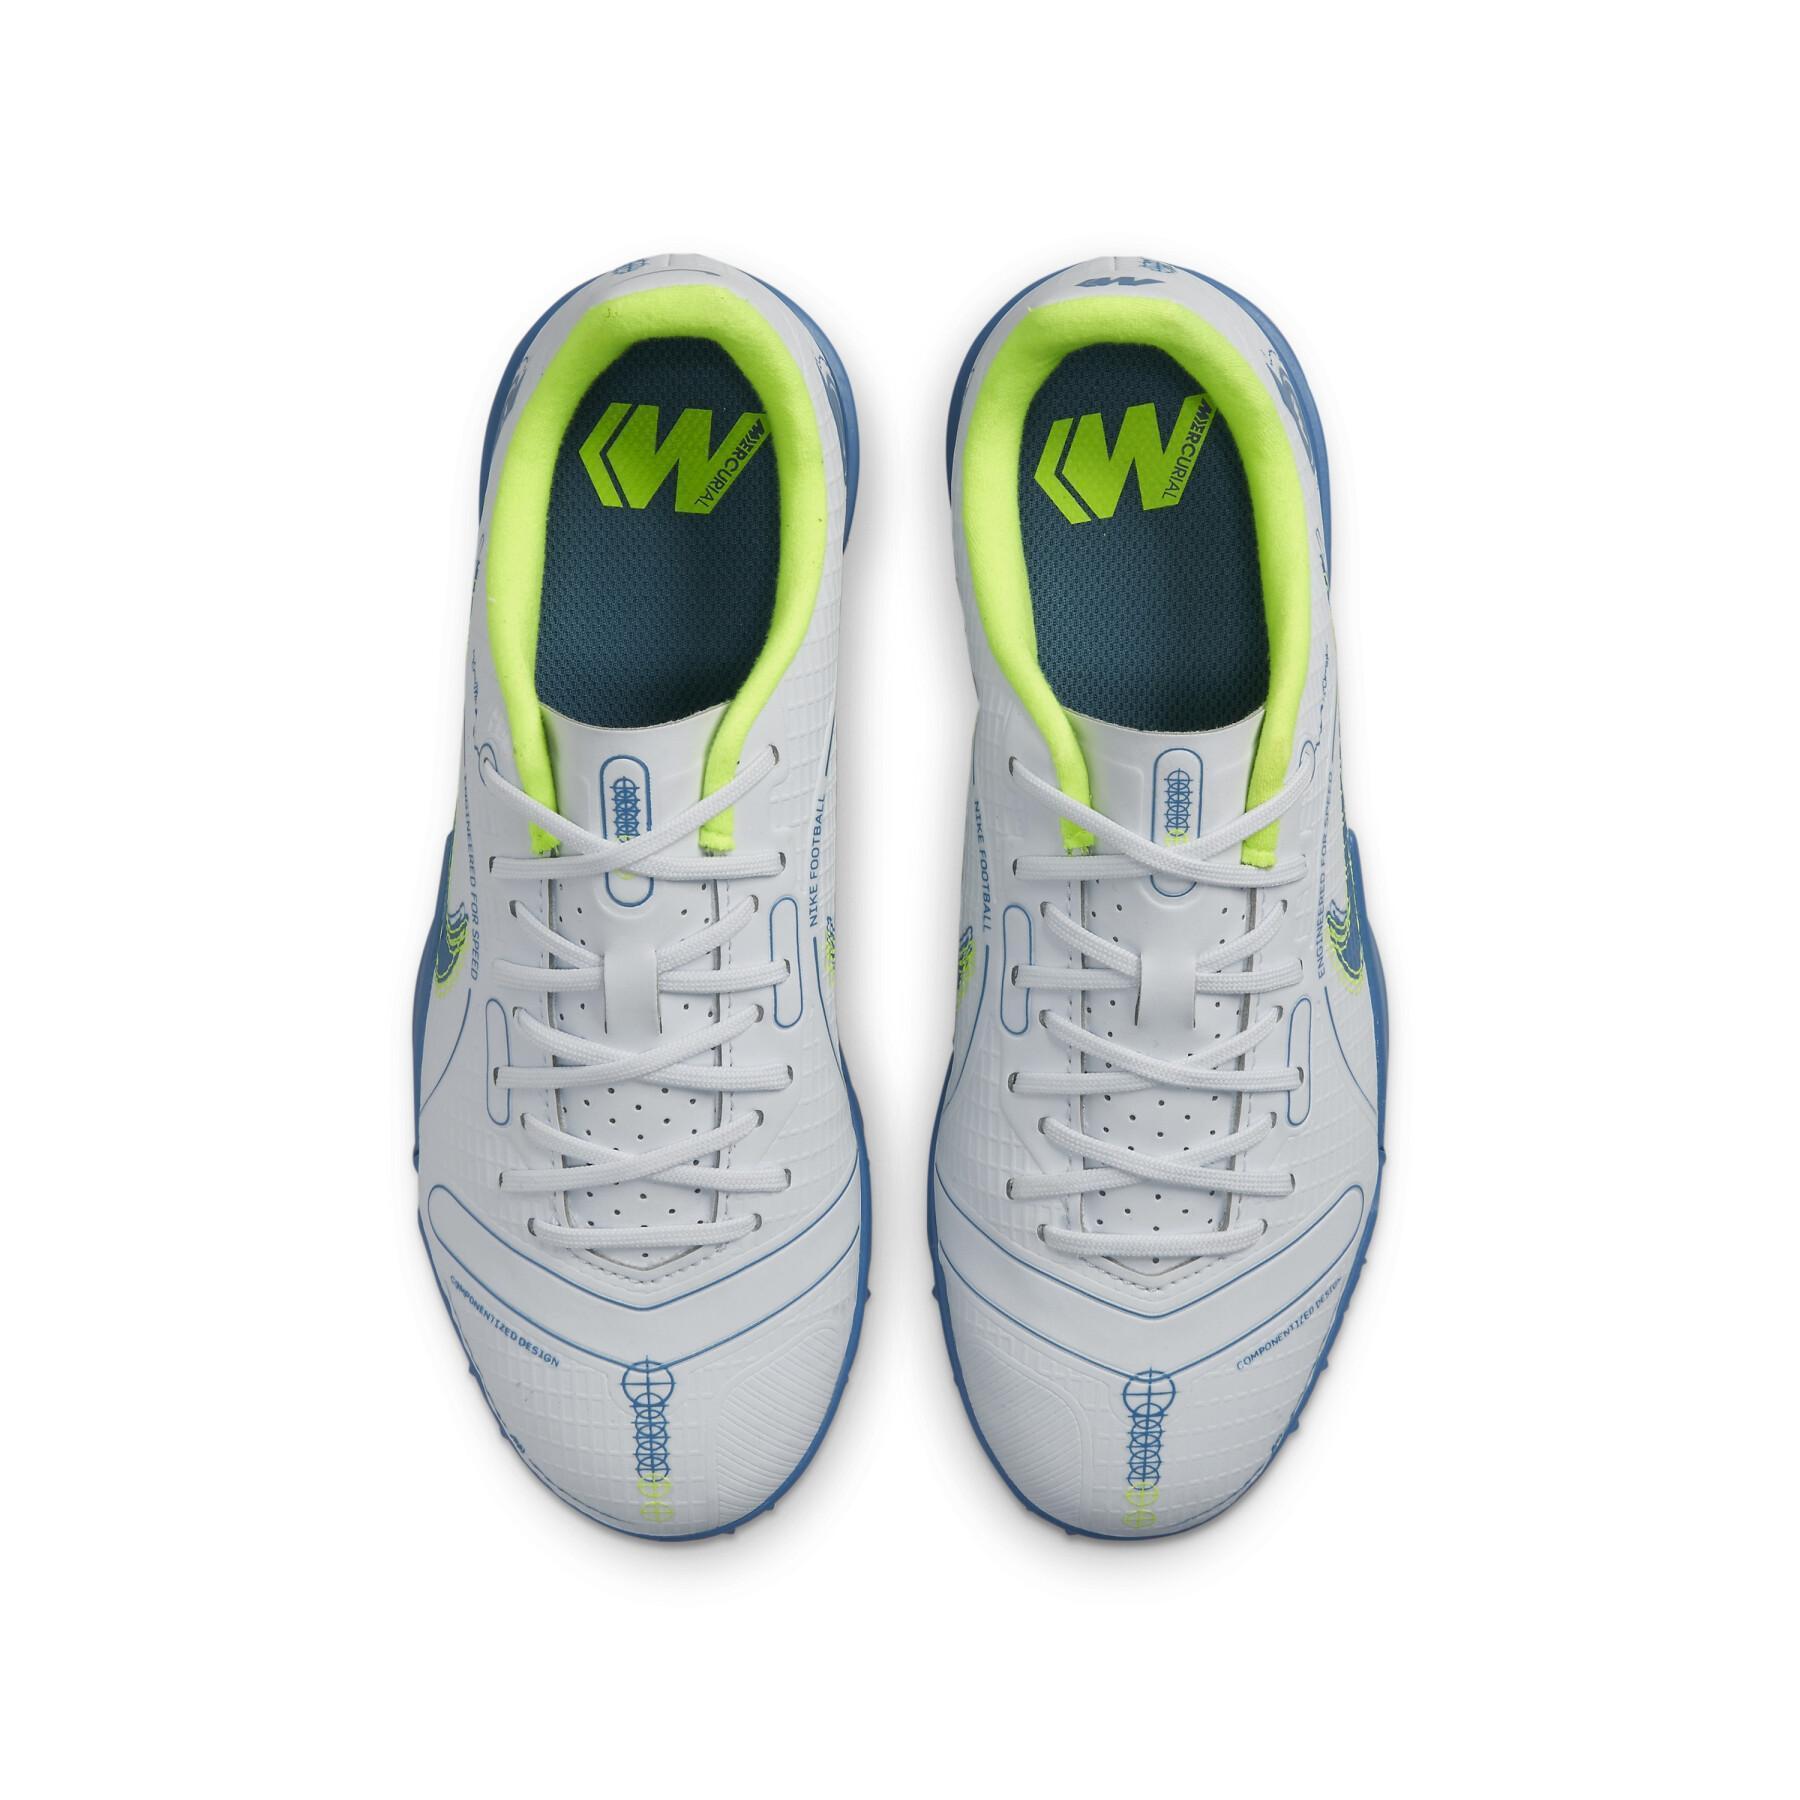 Children's soccer shoes Nike Mercurial Vapor 14 Academy - Progress Pack